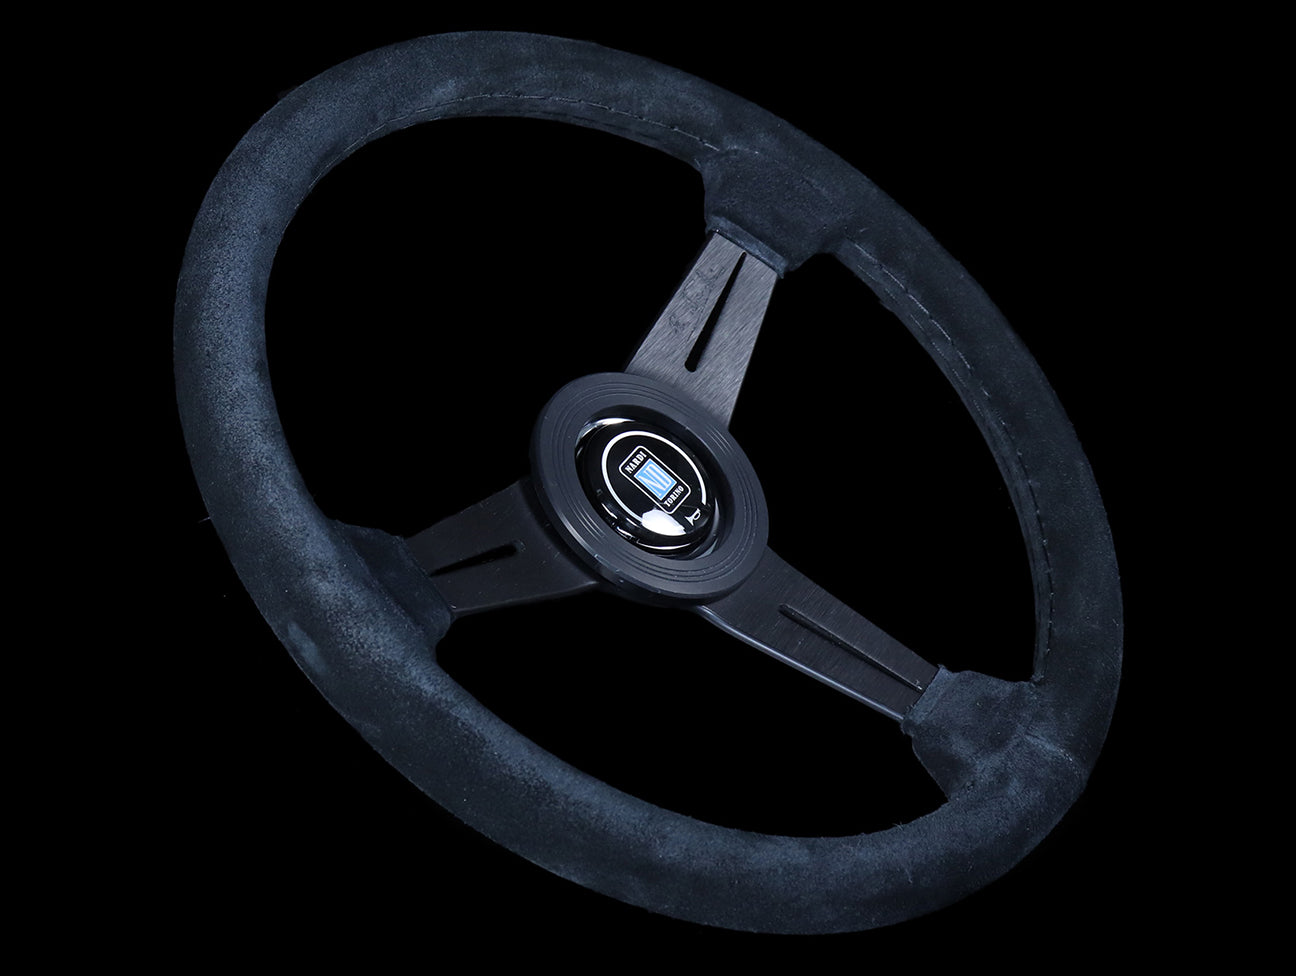 Nardi Classic 360mm Steering Wheel - Black Suede / Black Stitch